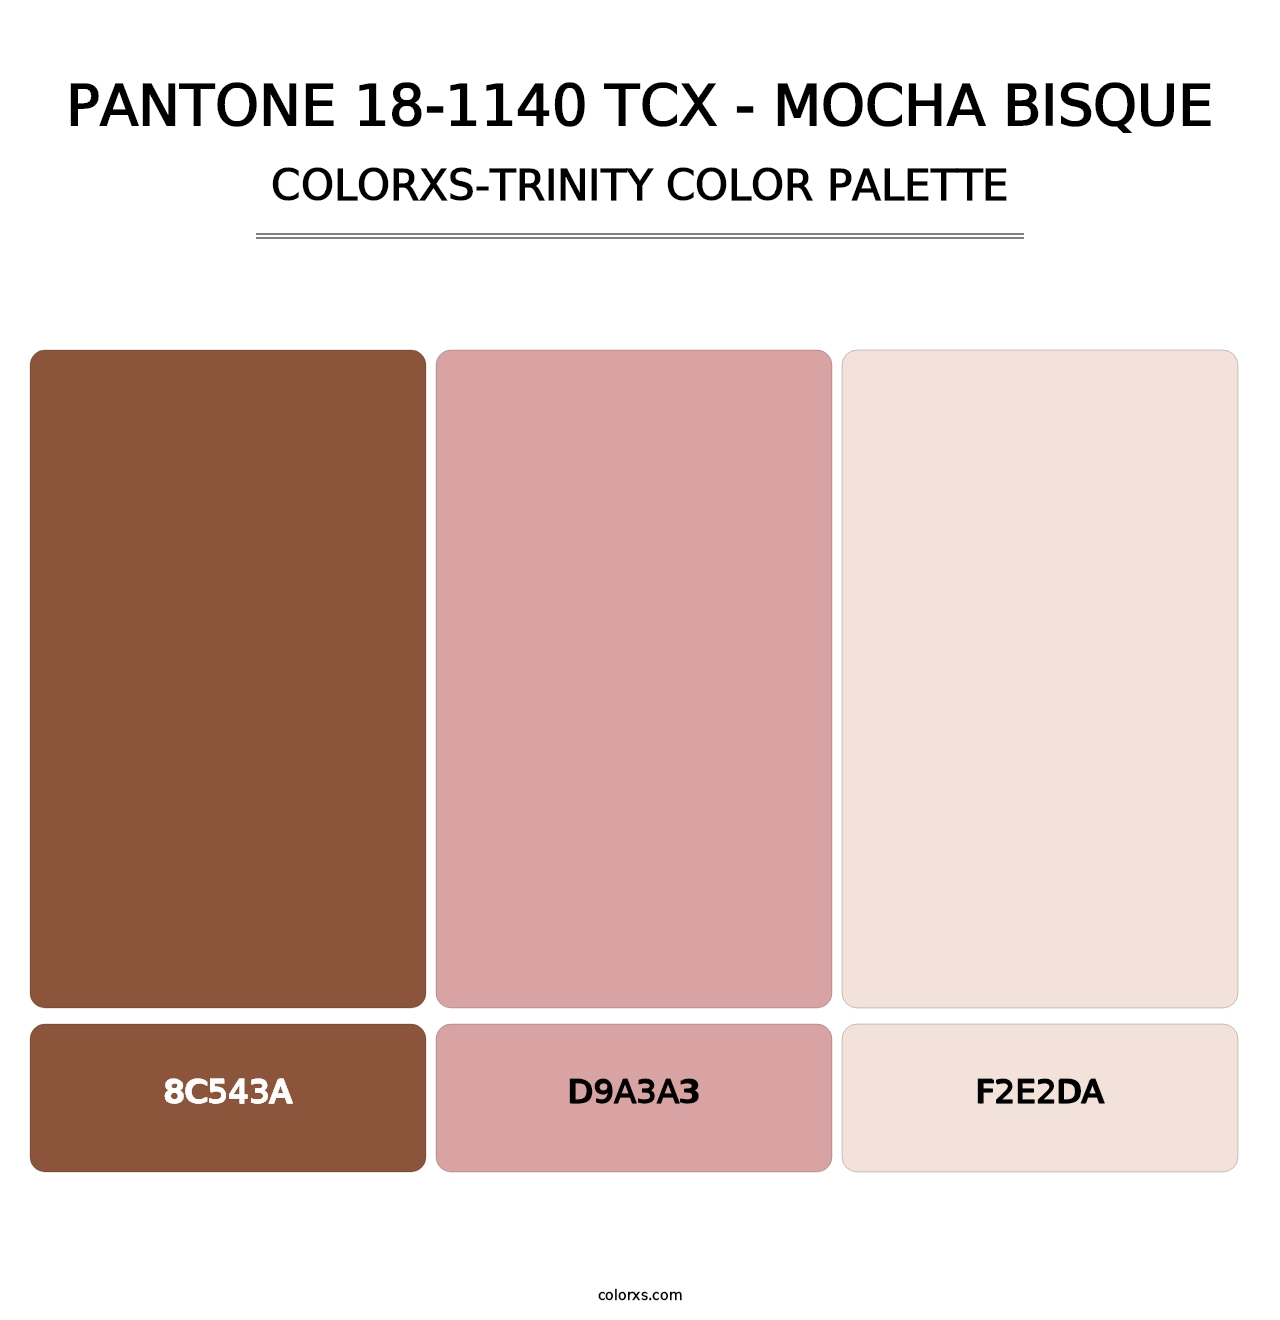 PANTONE 18-1140 TCX - Mocha Bisque - Colorxs Trinity Palette